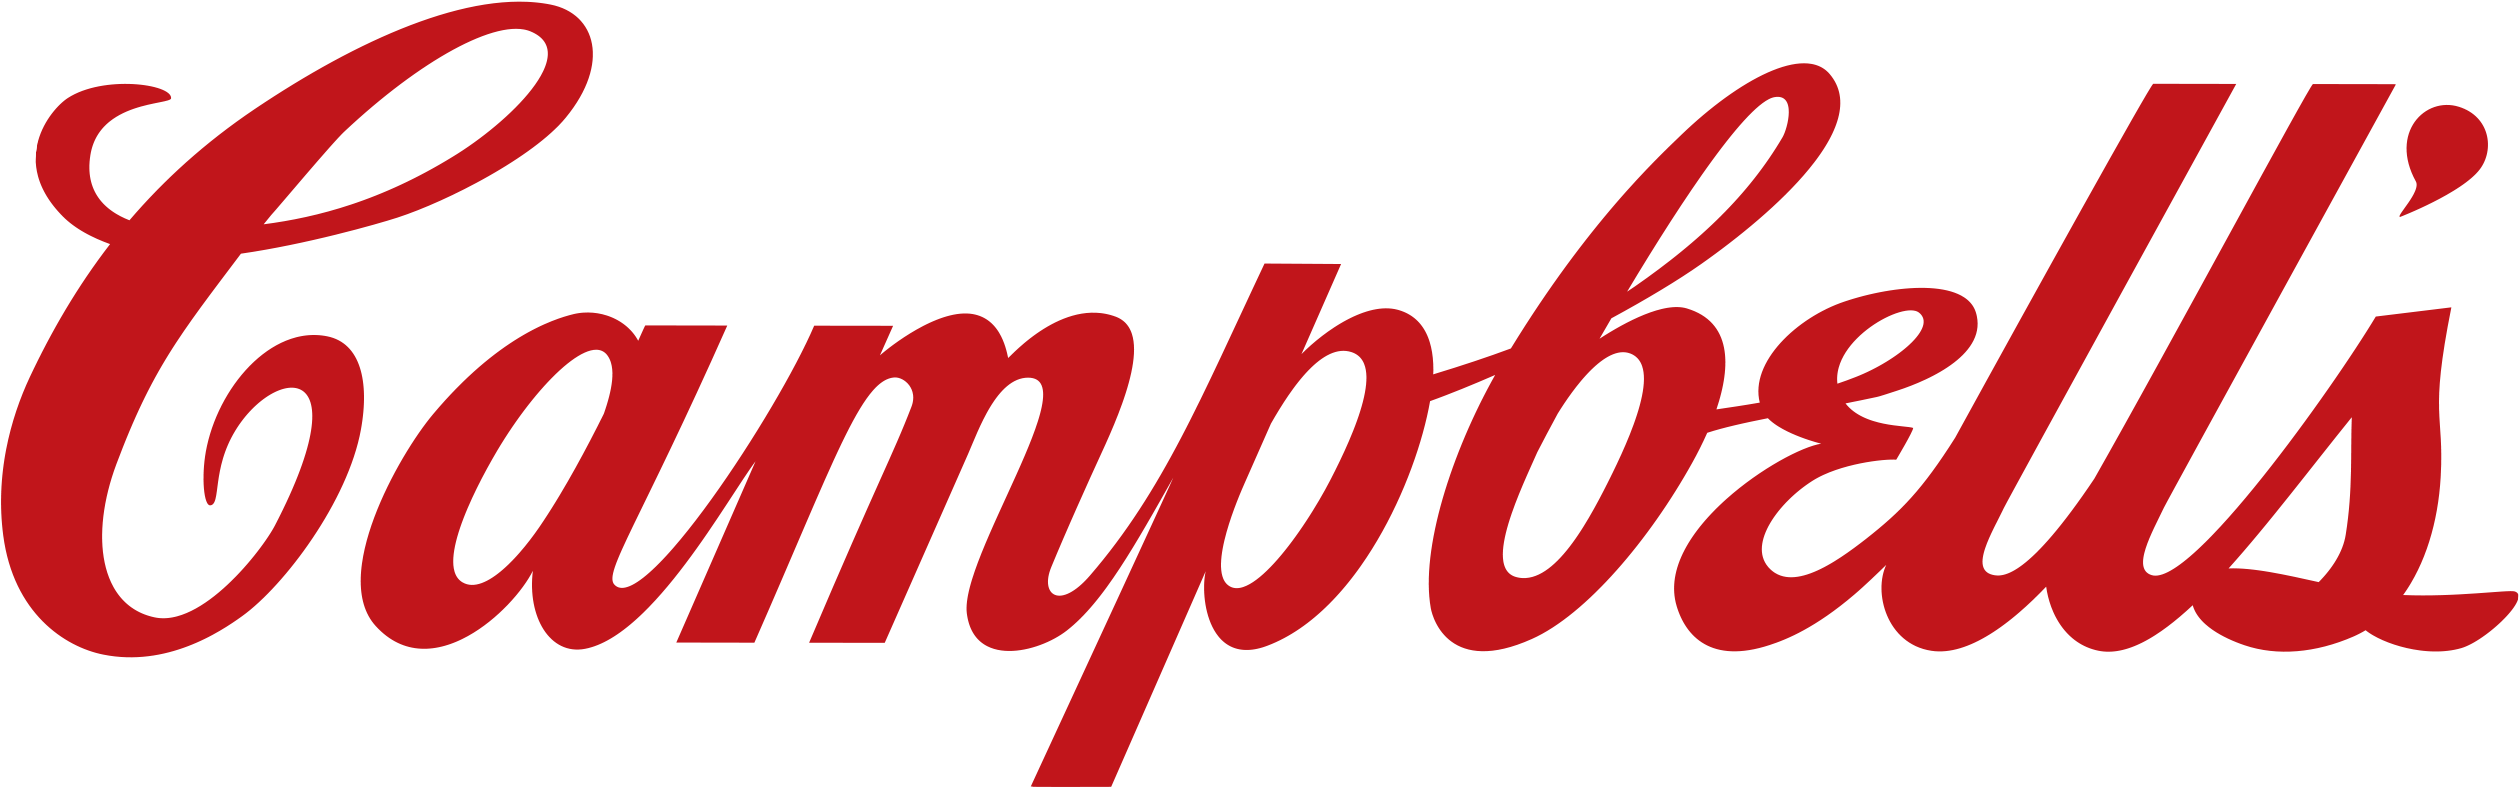 15 Aug 2018 - Campbells Soup Logo Png (2550x2164), Png Download